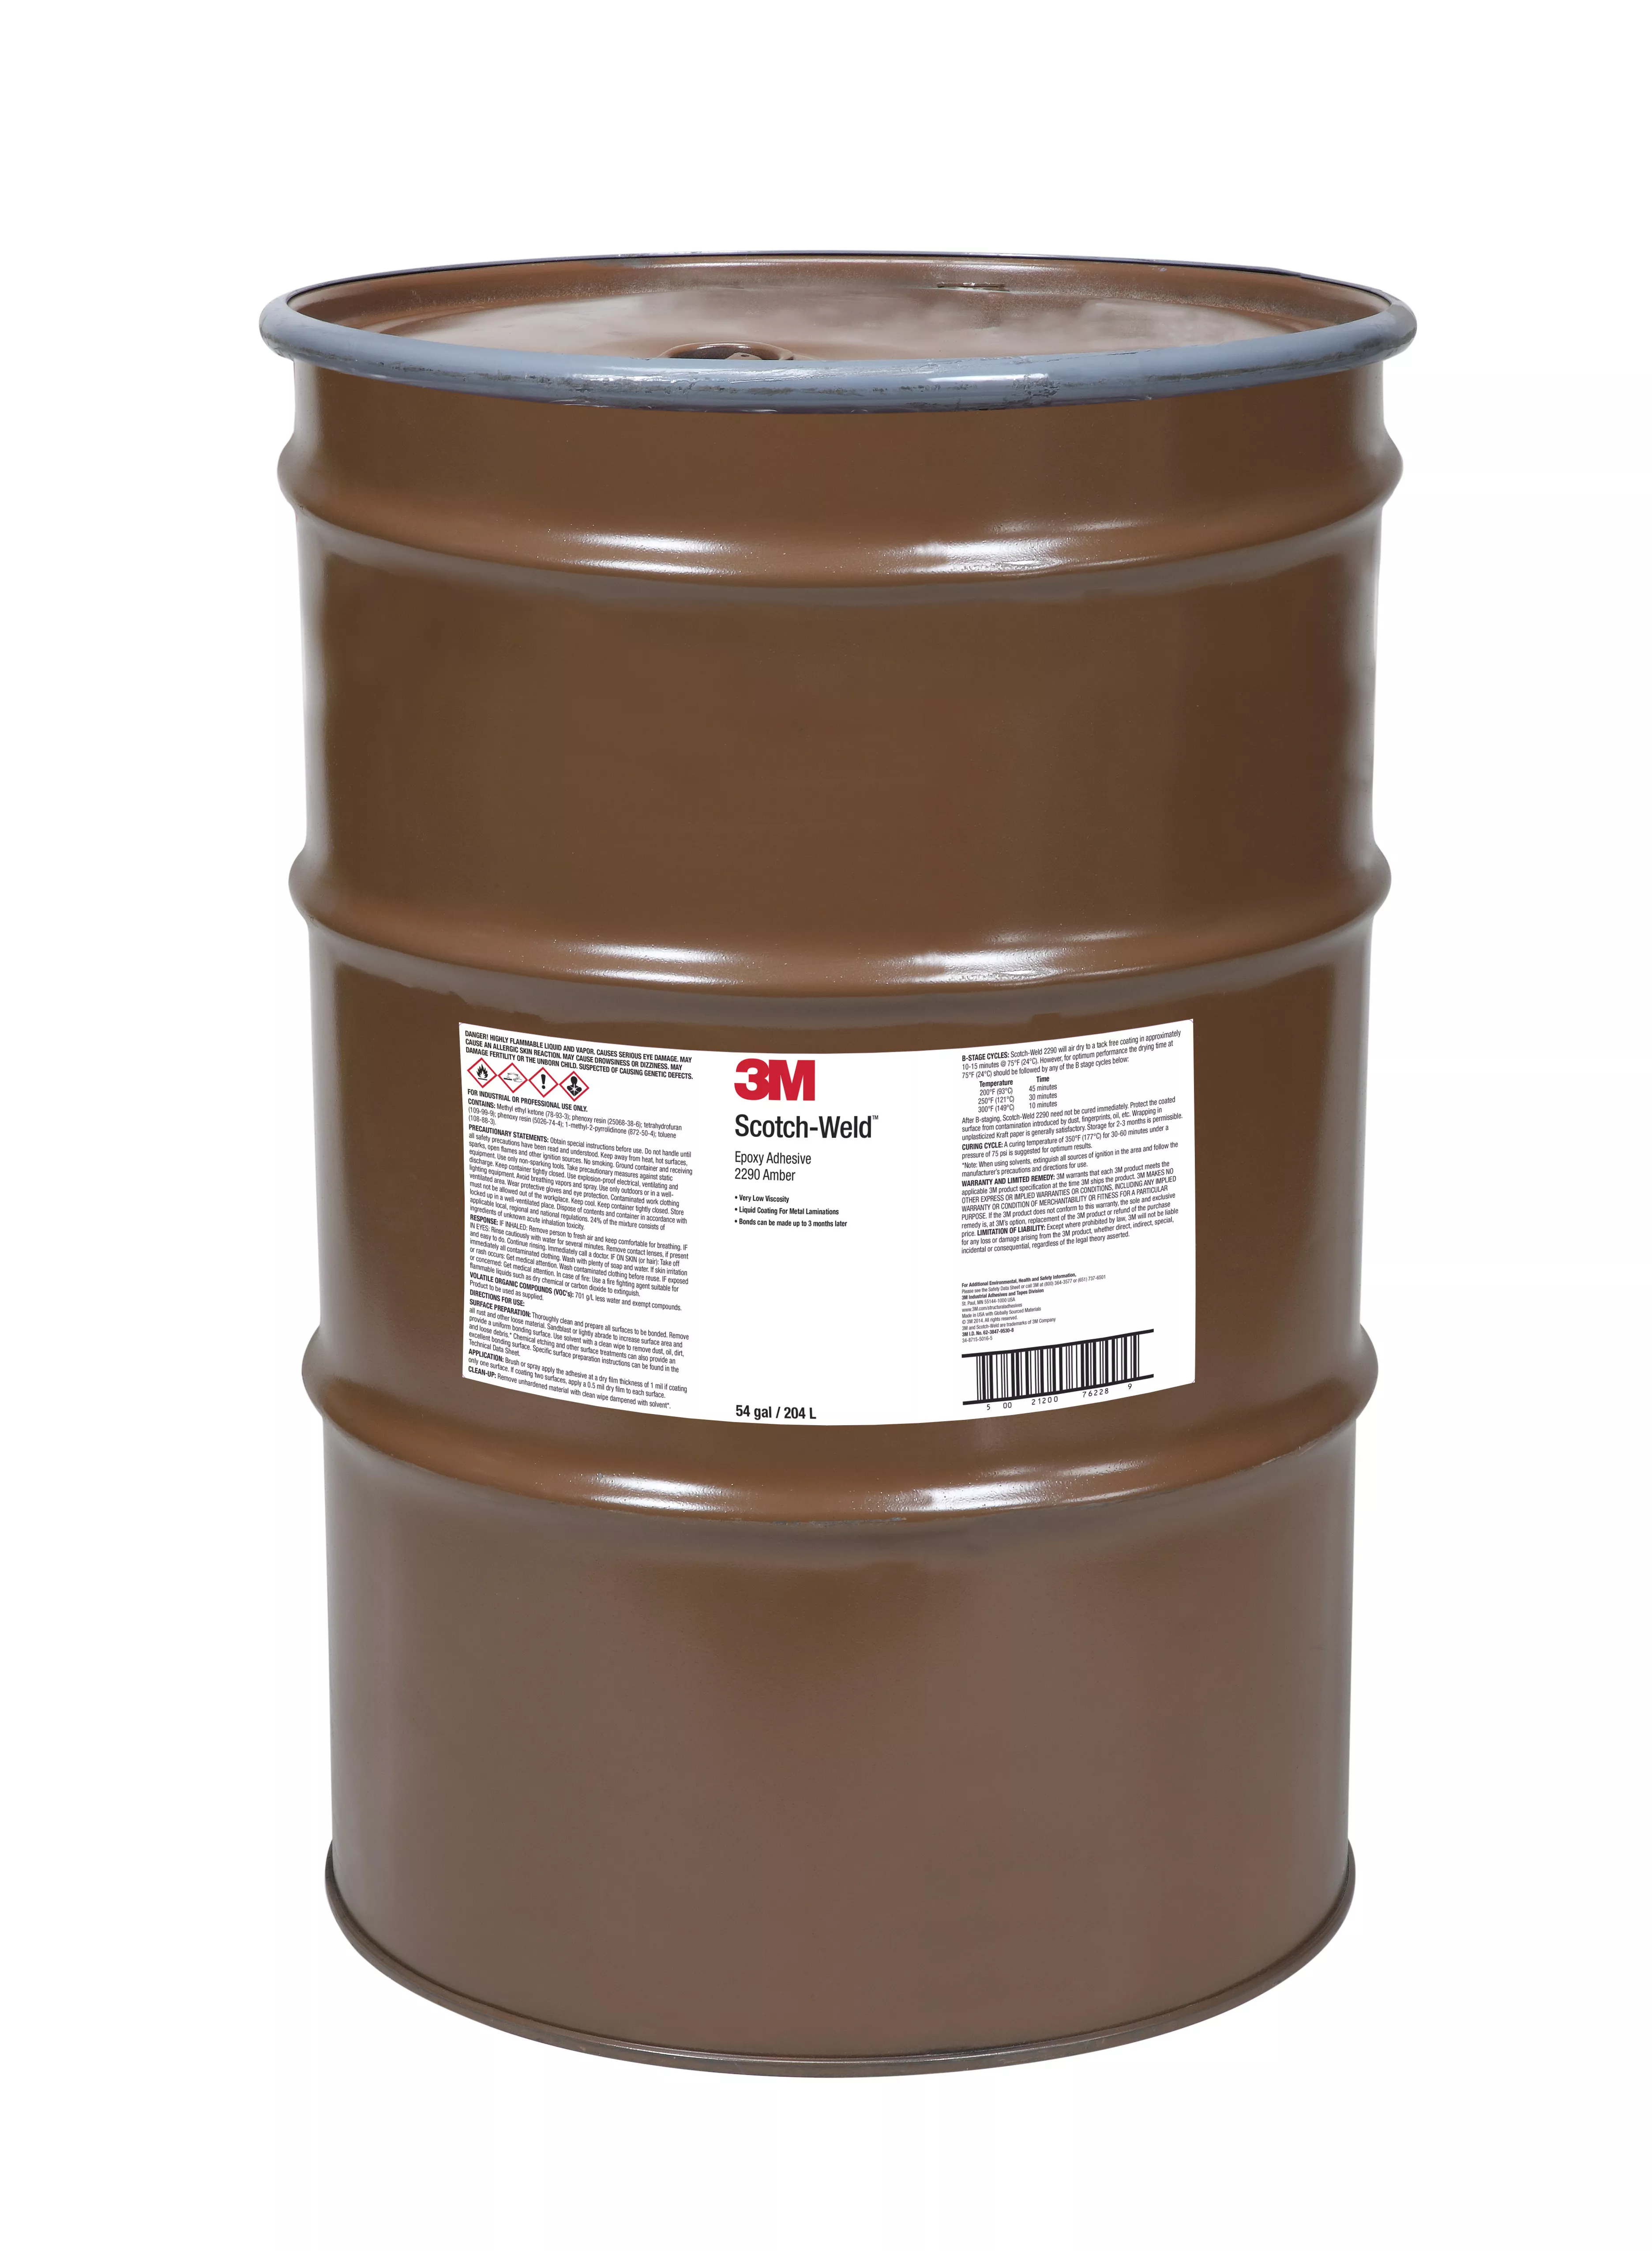 3M™ Scotch-Weld™ Epoxy Adhesive/Coating 2290, Amber, 55 Gallon (54
Gallon Net), Drum